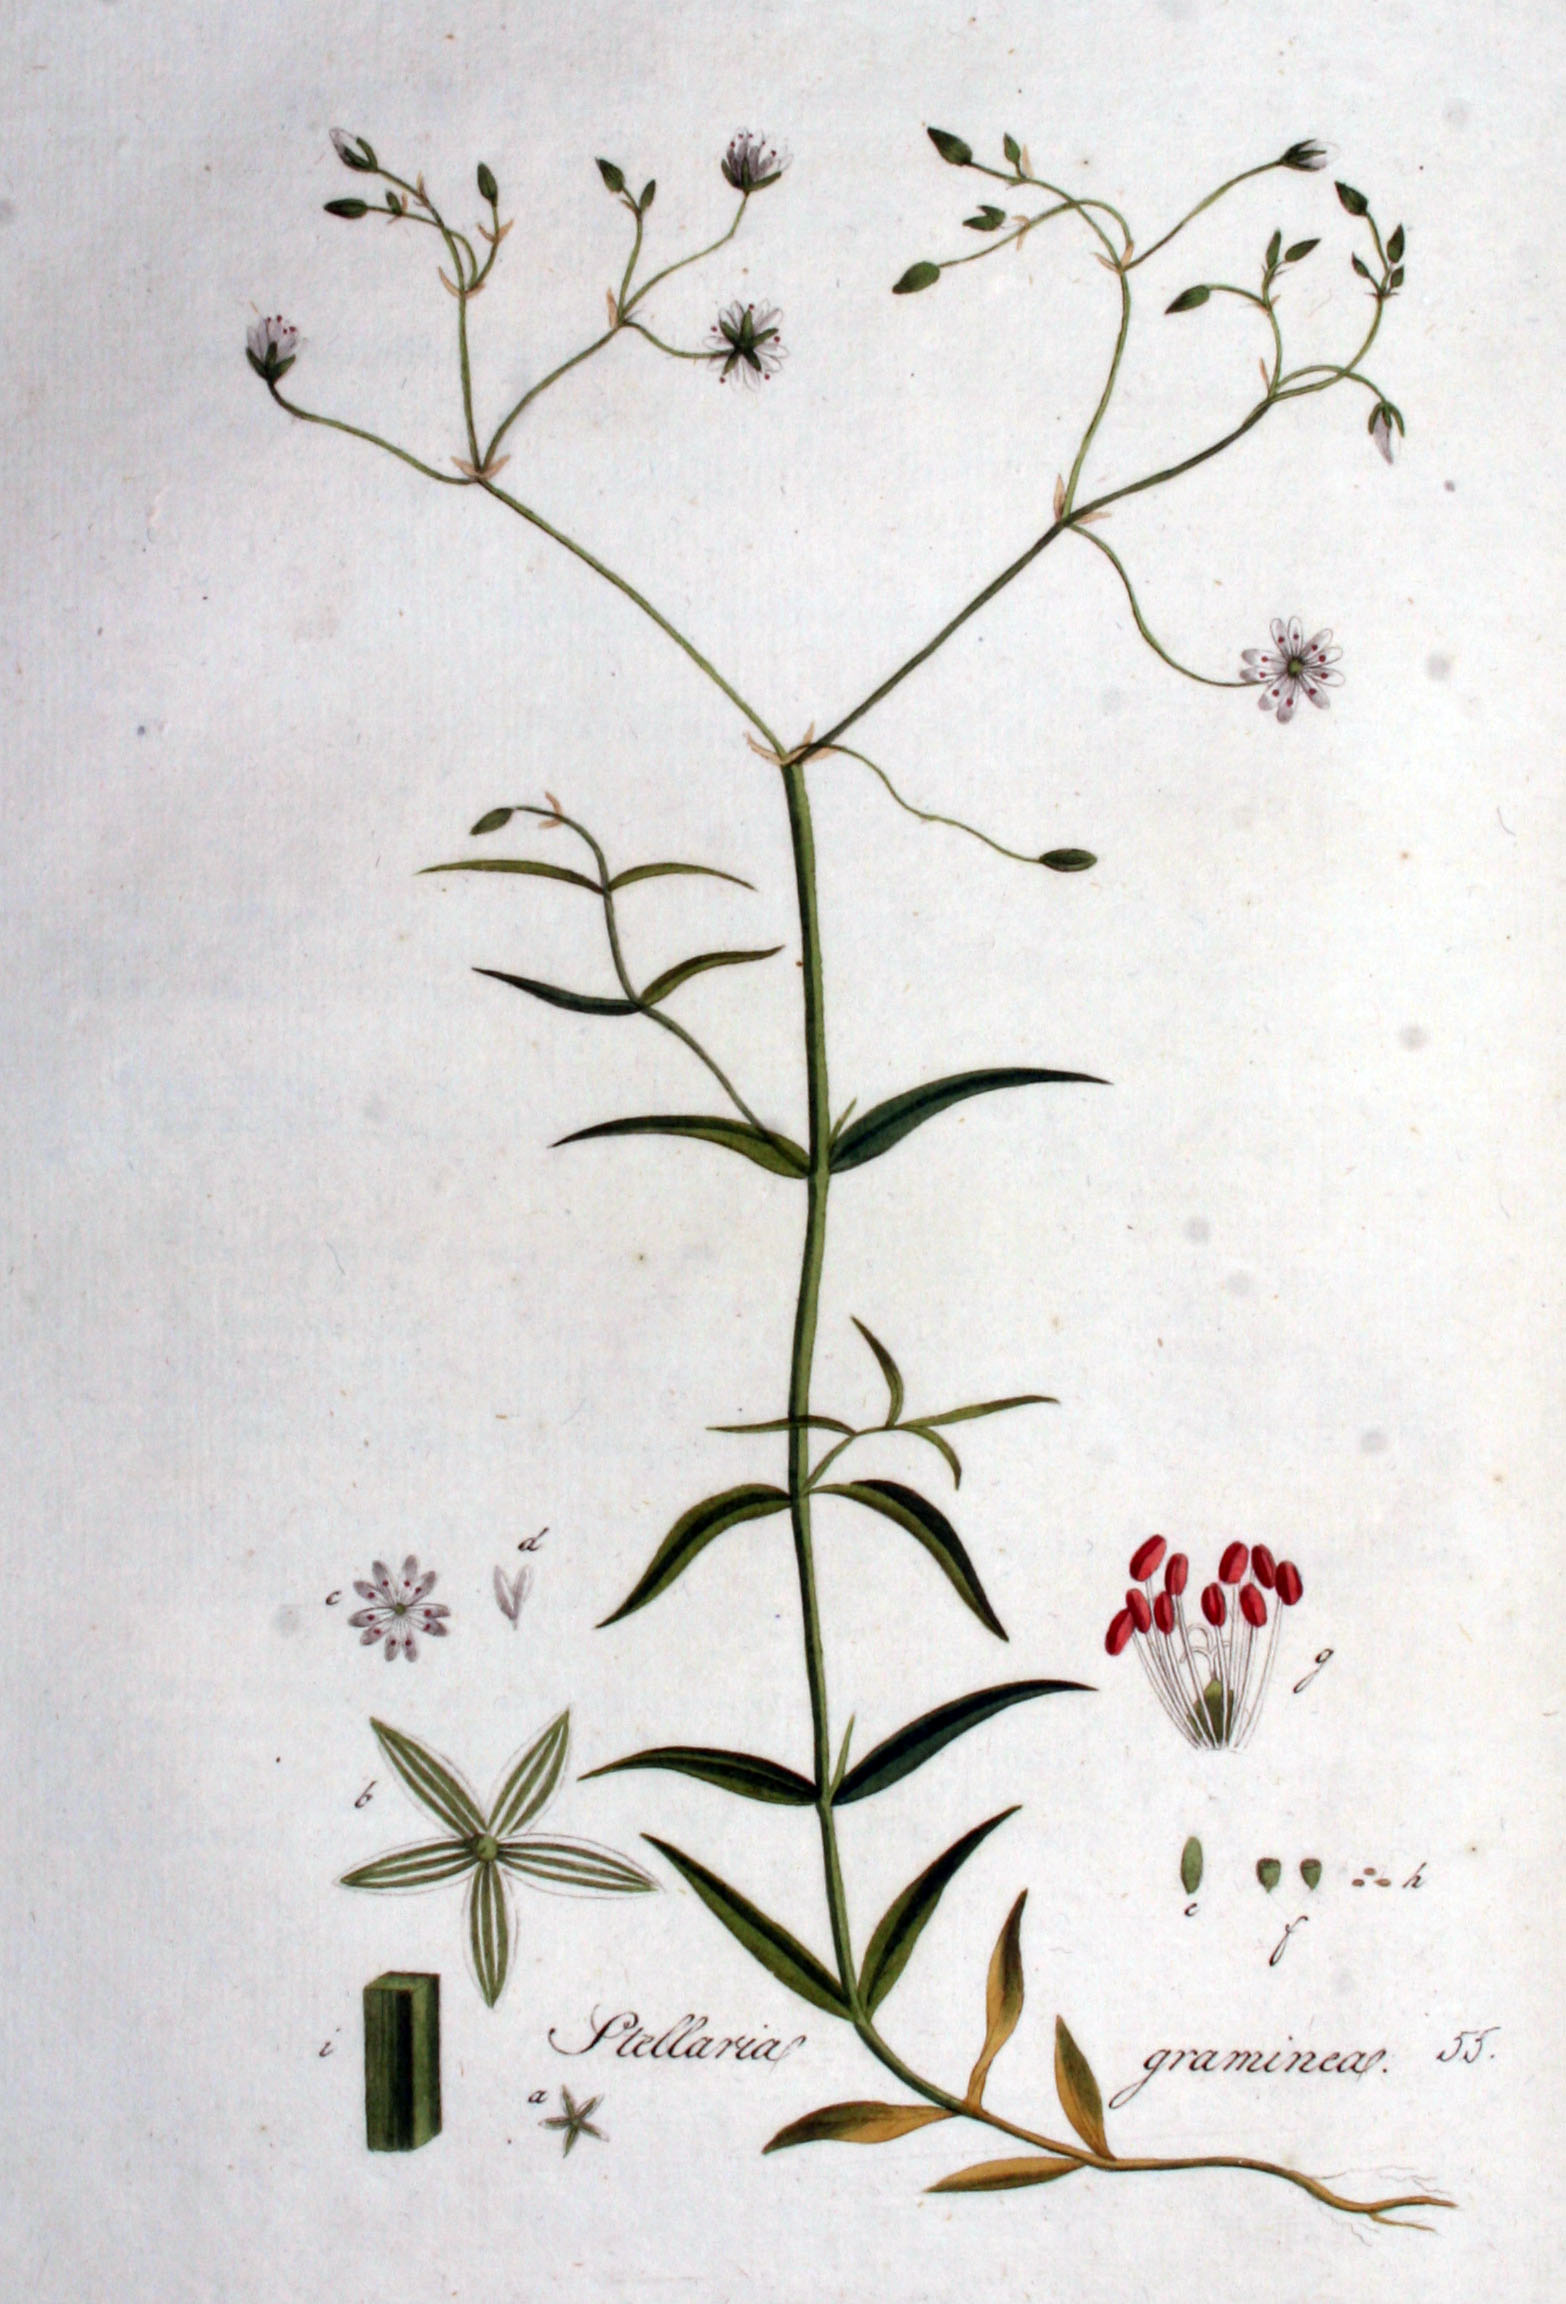 Stellaria graminea botanical illustration by Christiaan Sepp circa 1800.